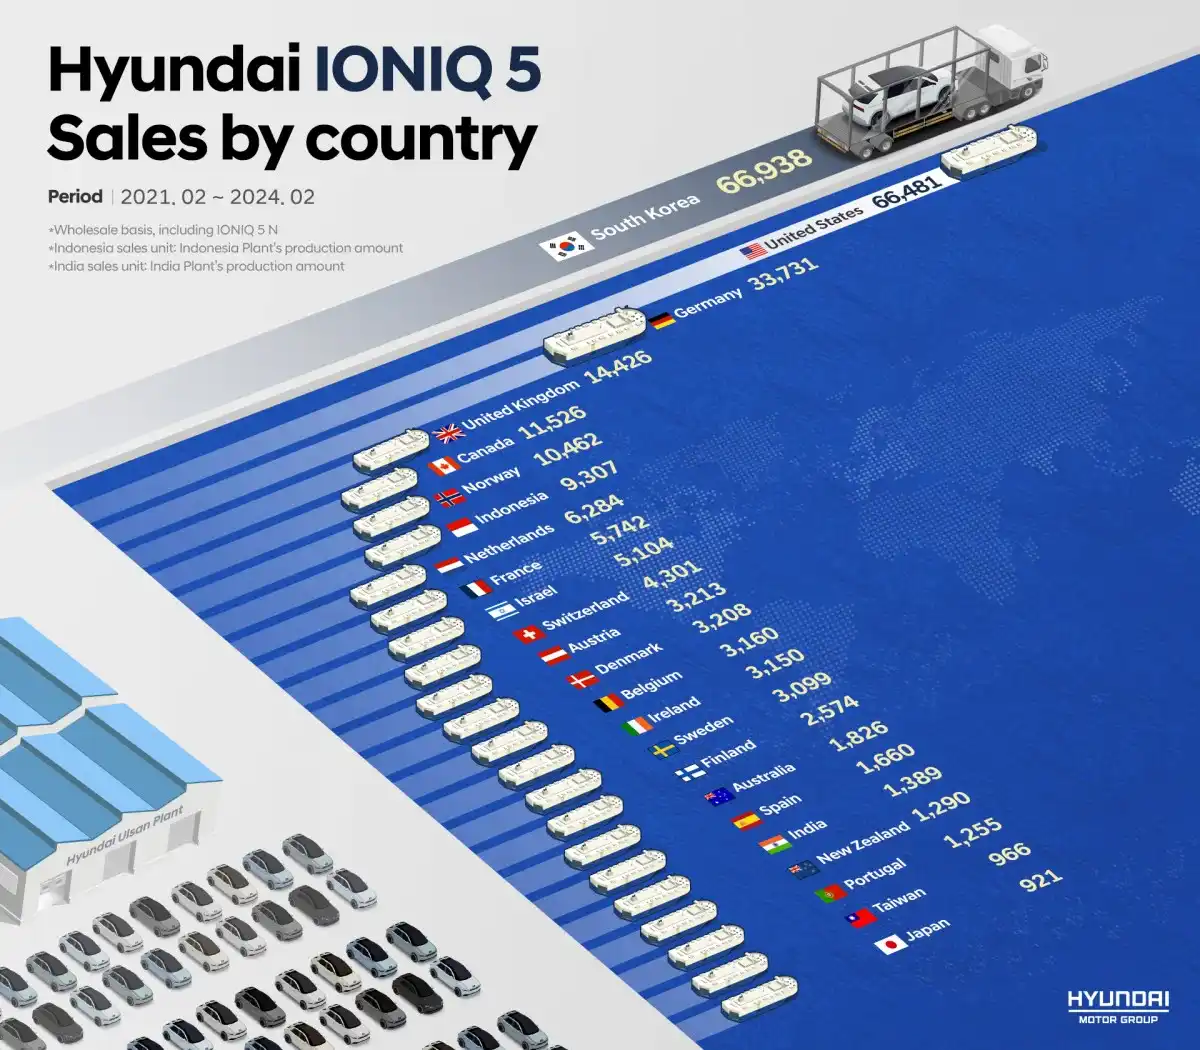 Selling 262,000 Hyundai Ioniq 5 electric cars in the world